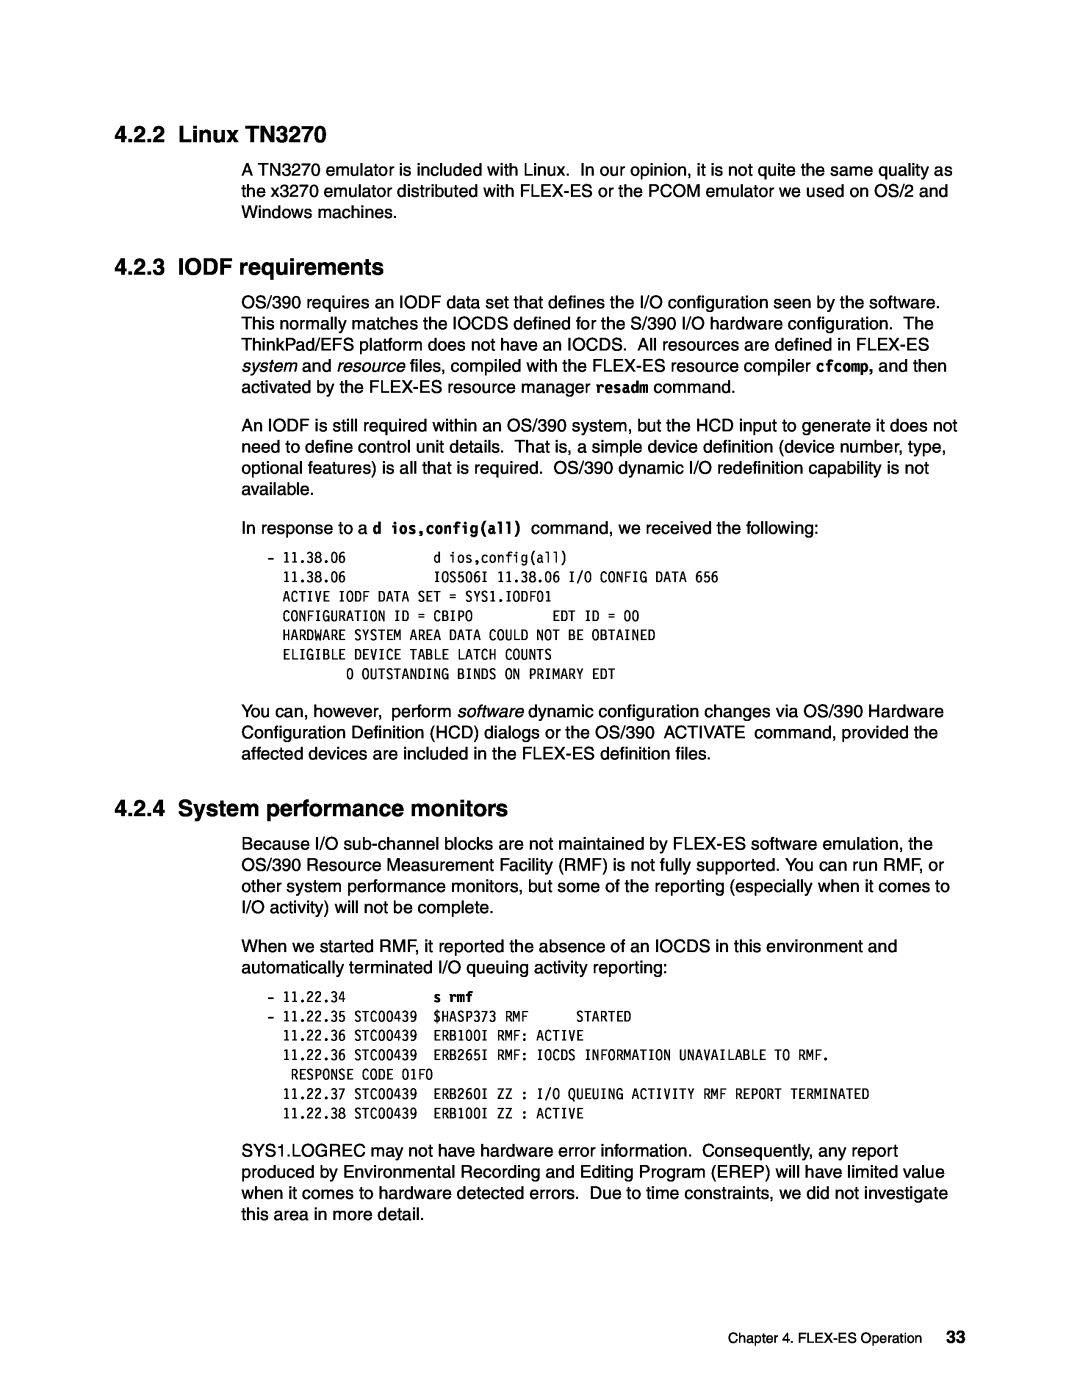 IBM s/390 manual Linux TN3270, IODF requirements, System performance monitors 